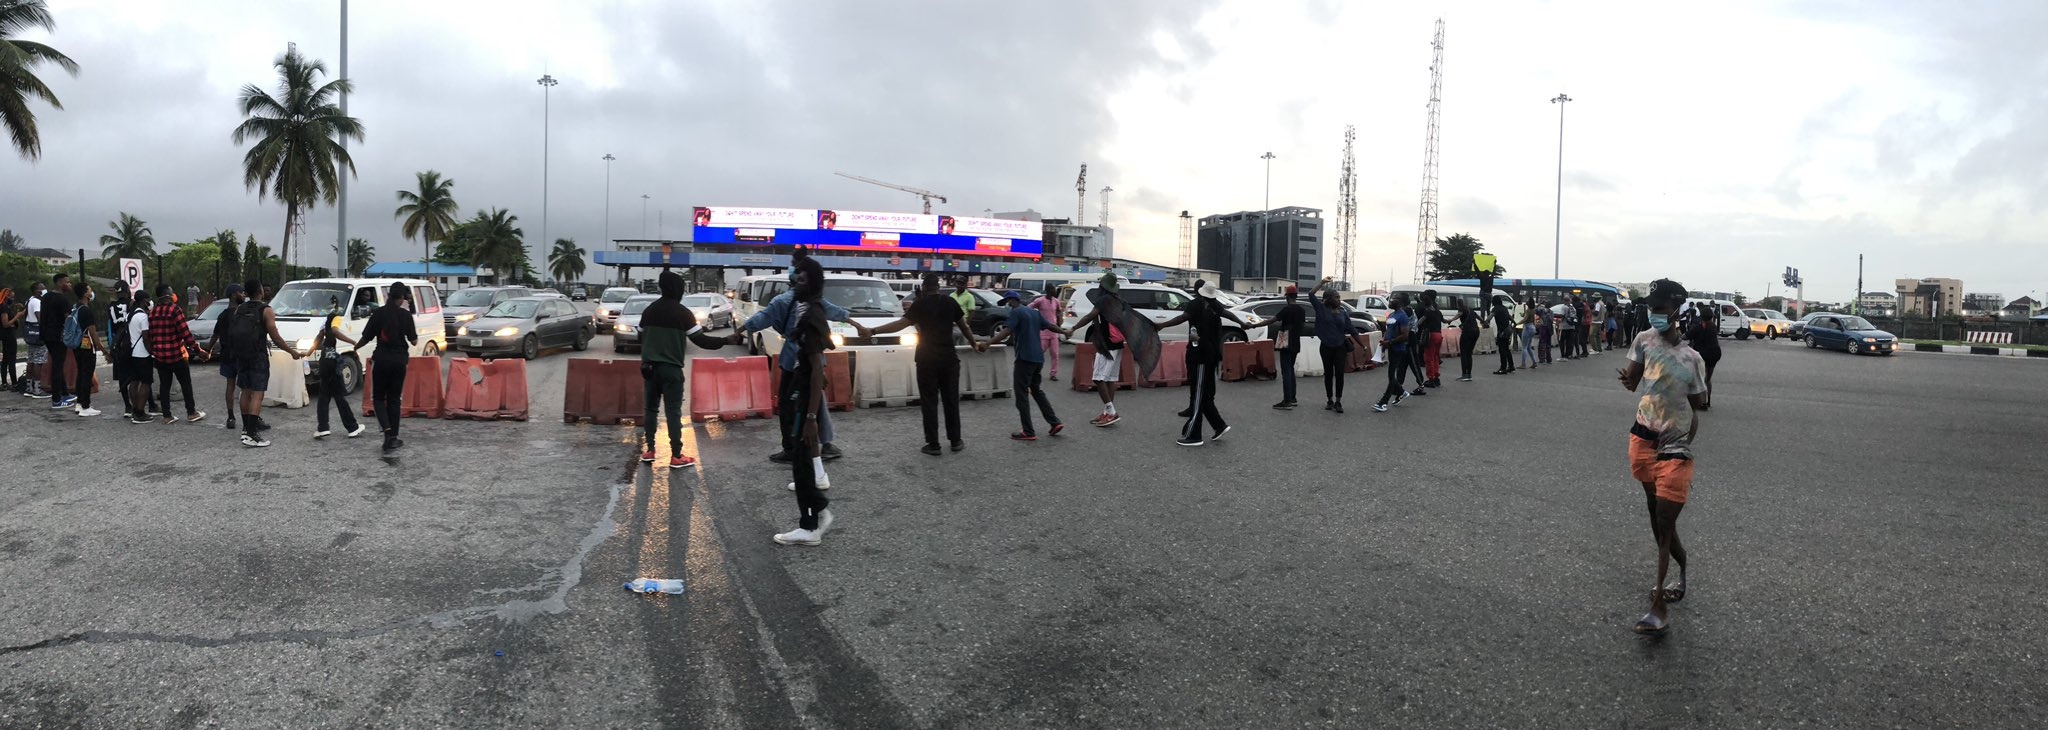 Lekki toll gate protest